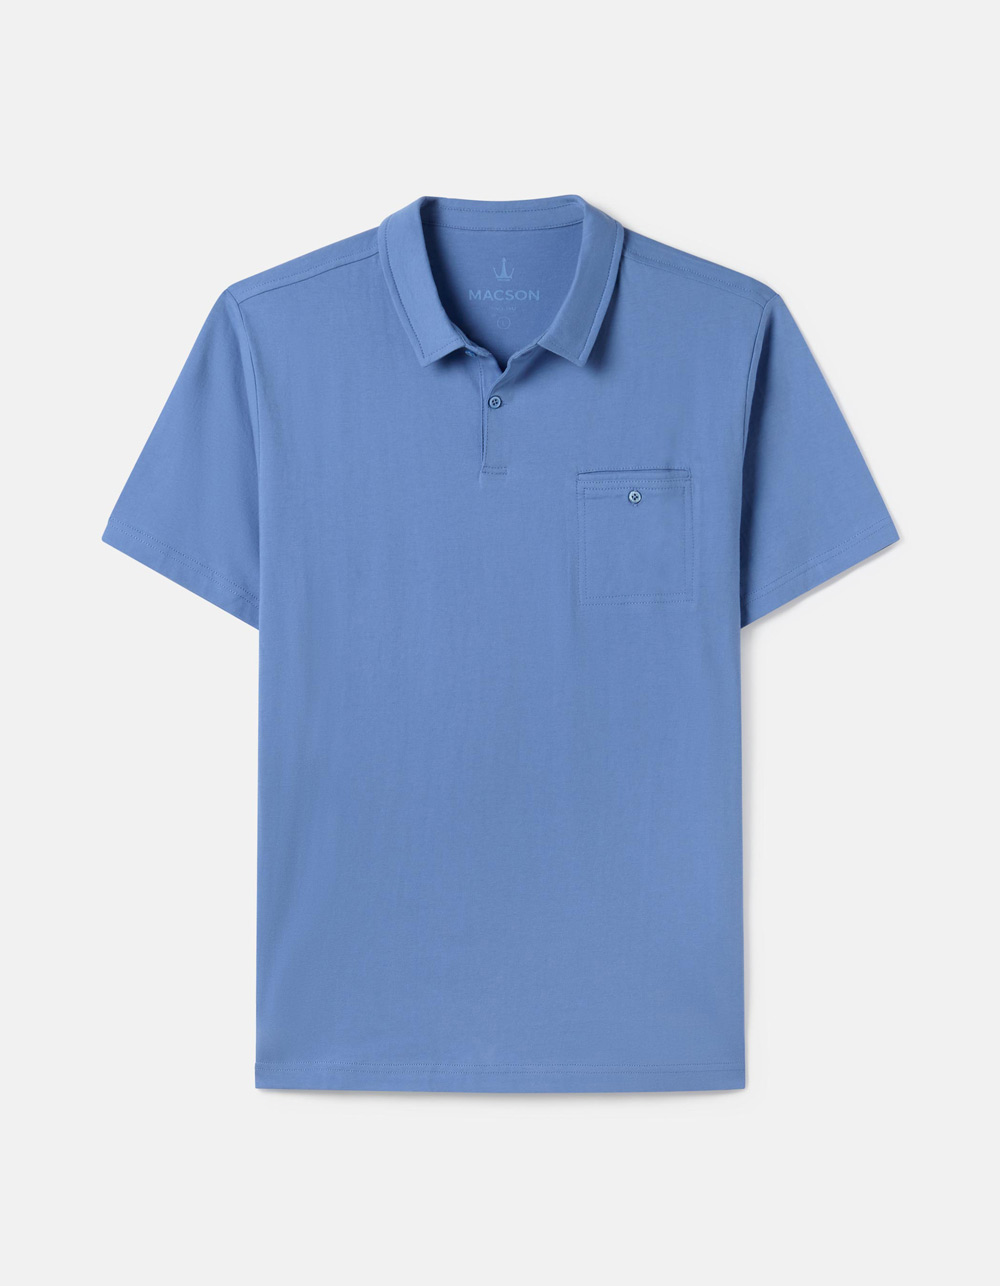 Royal blue pocket polo shirt